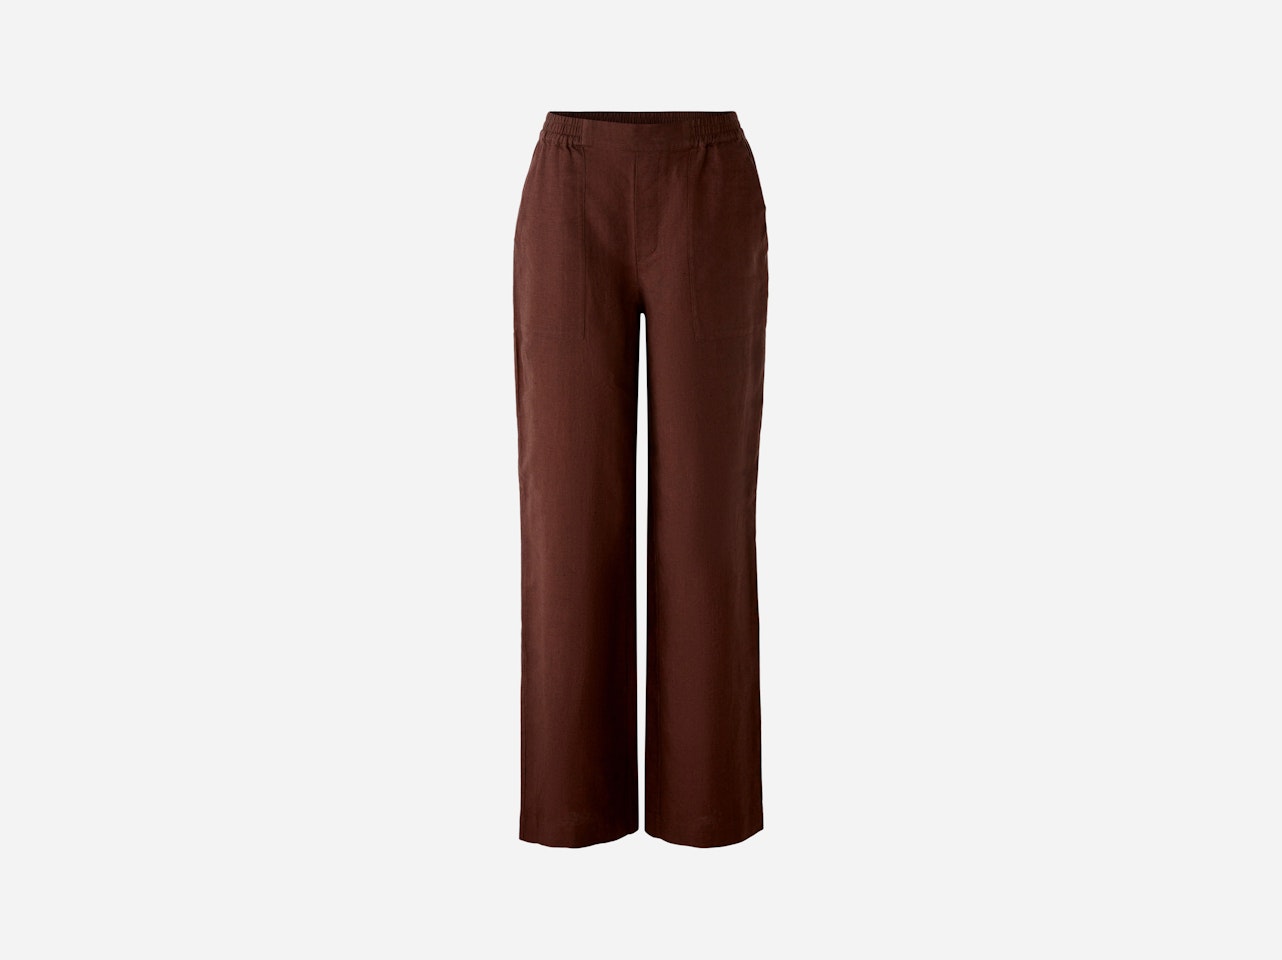 Bild 2 von Linen trousers for hatching in chocolate fudge | Oui